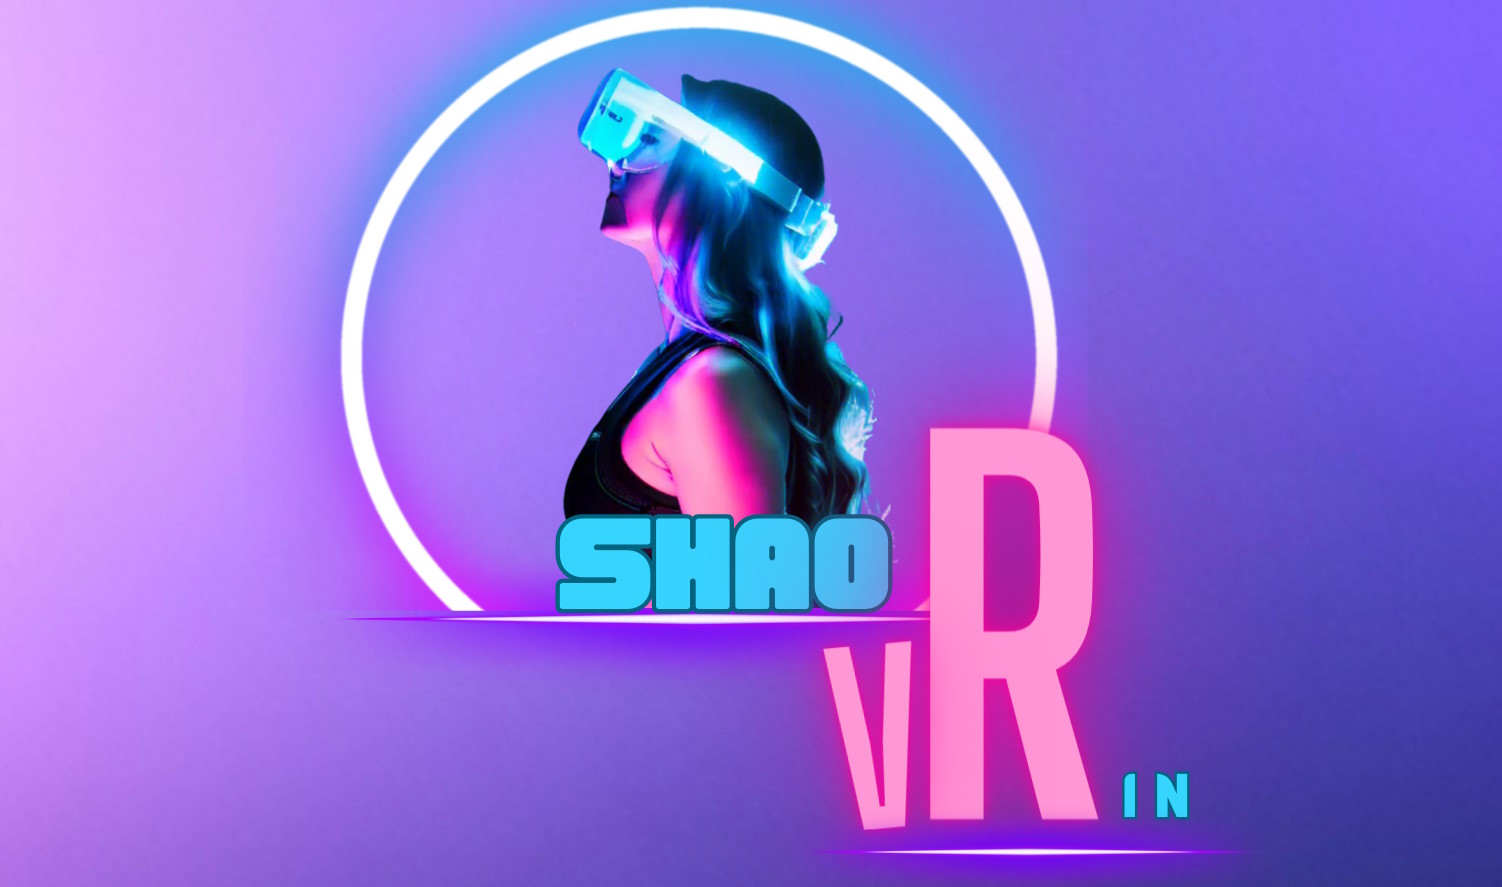 Shaorin VR